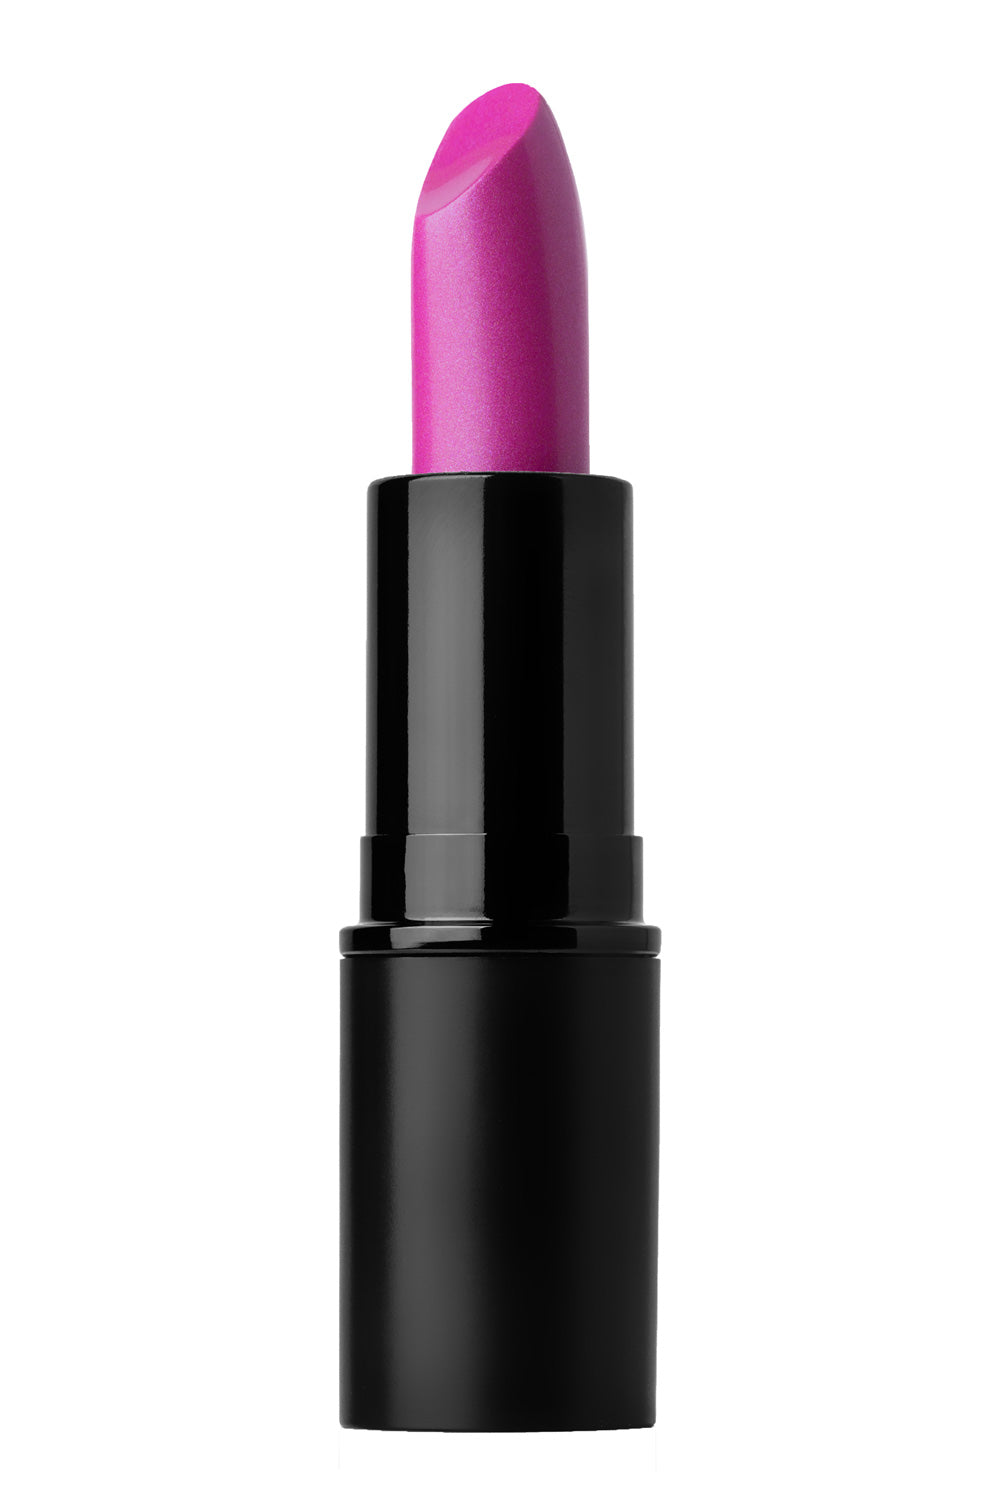 Flaming Fuchsia - Type 4 Lipstick